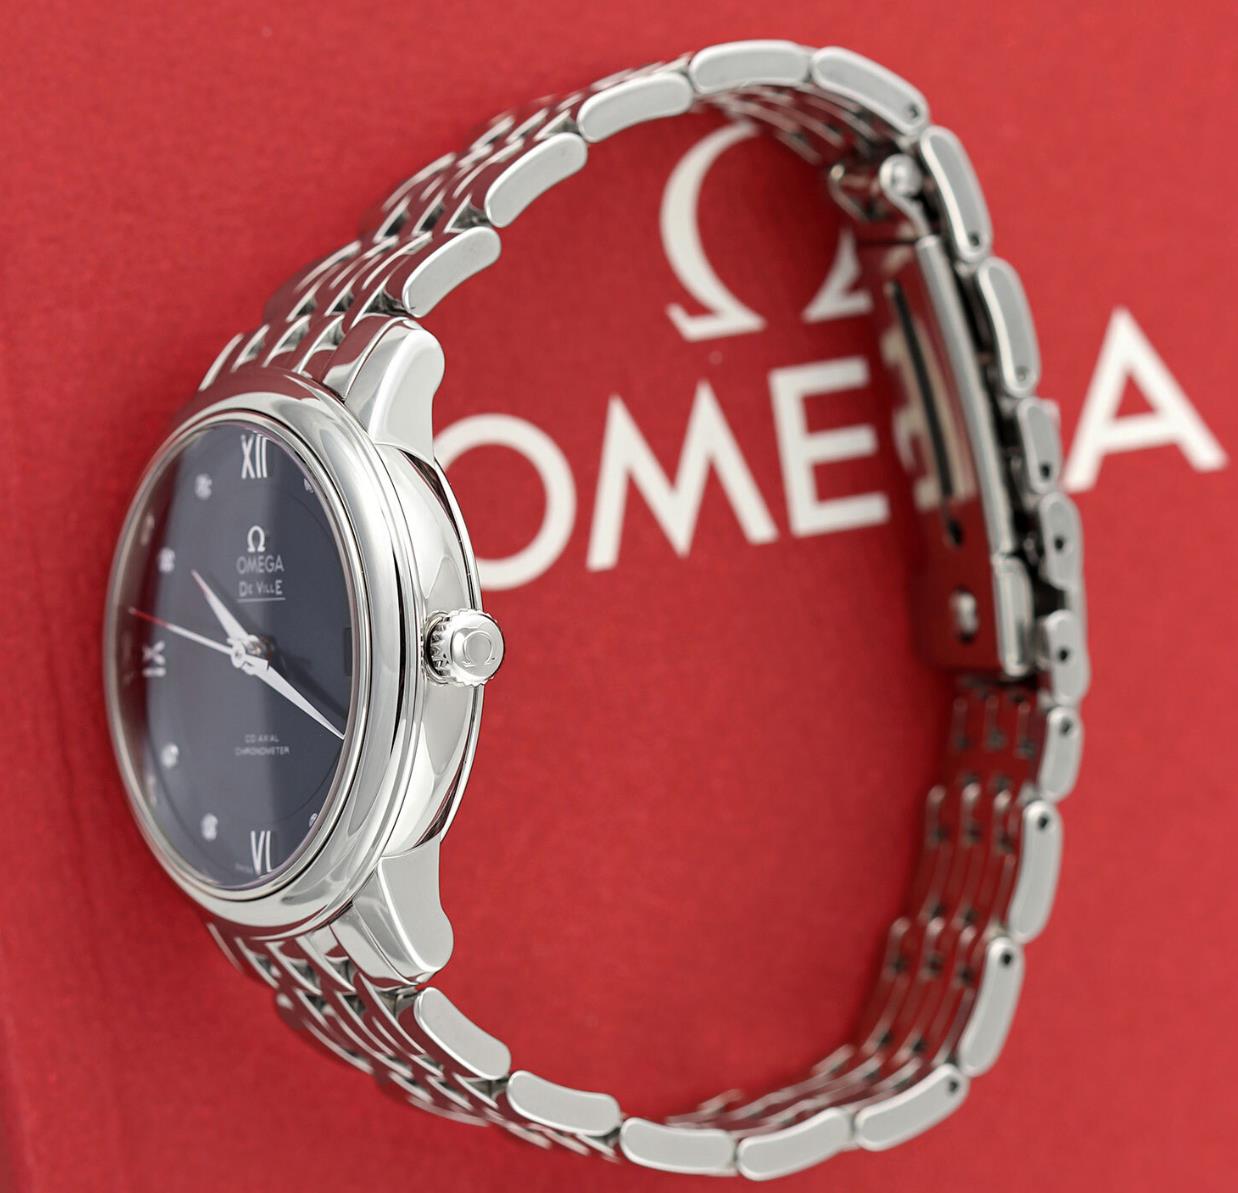 The stainless steel fake watch is waterproof.